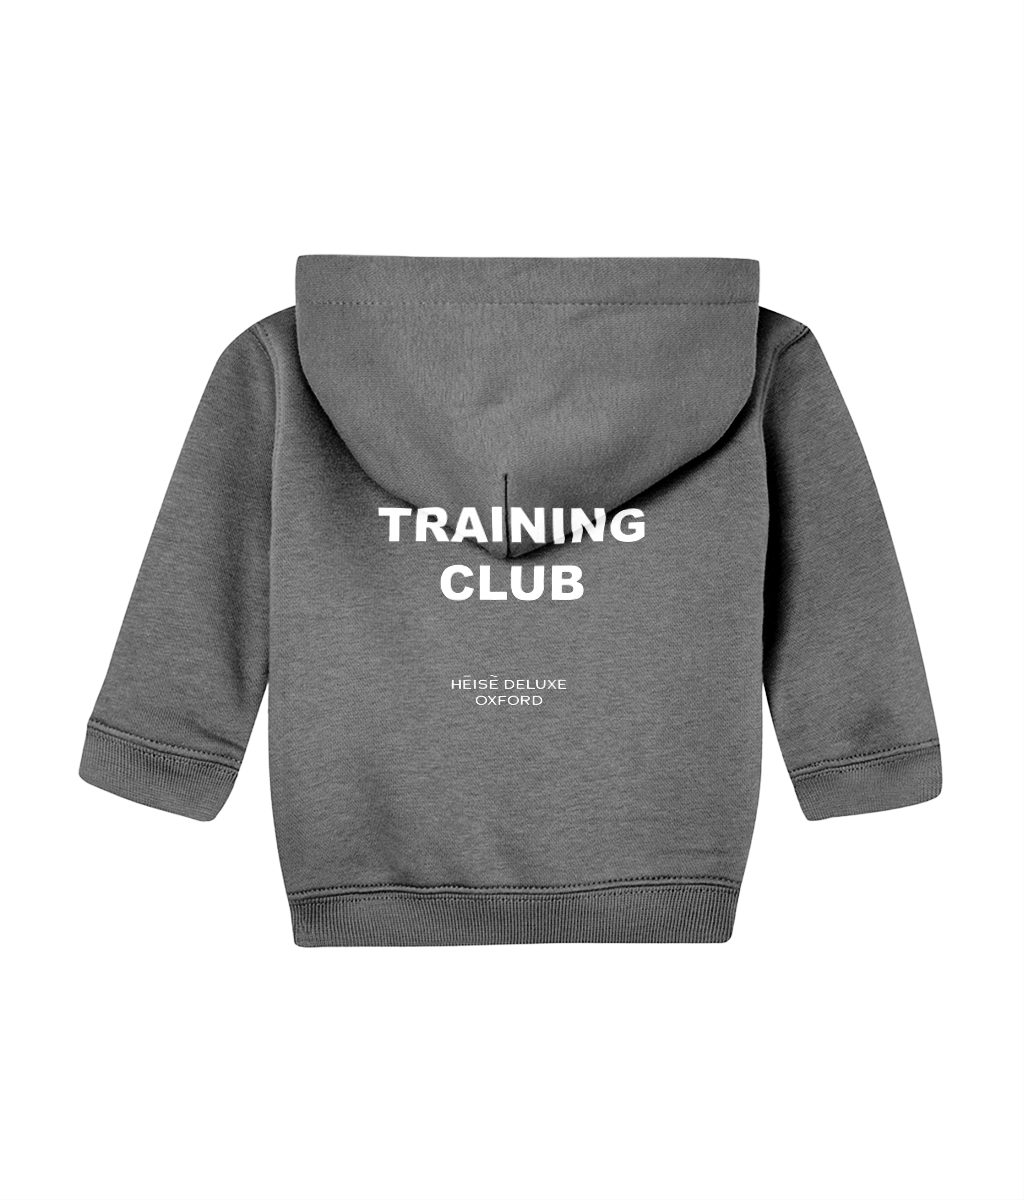 Babies Hoodies - Training Club